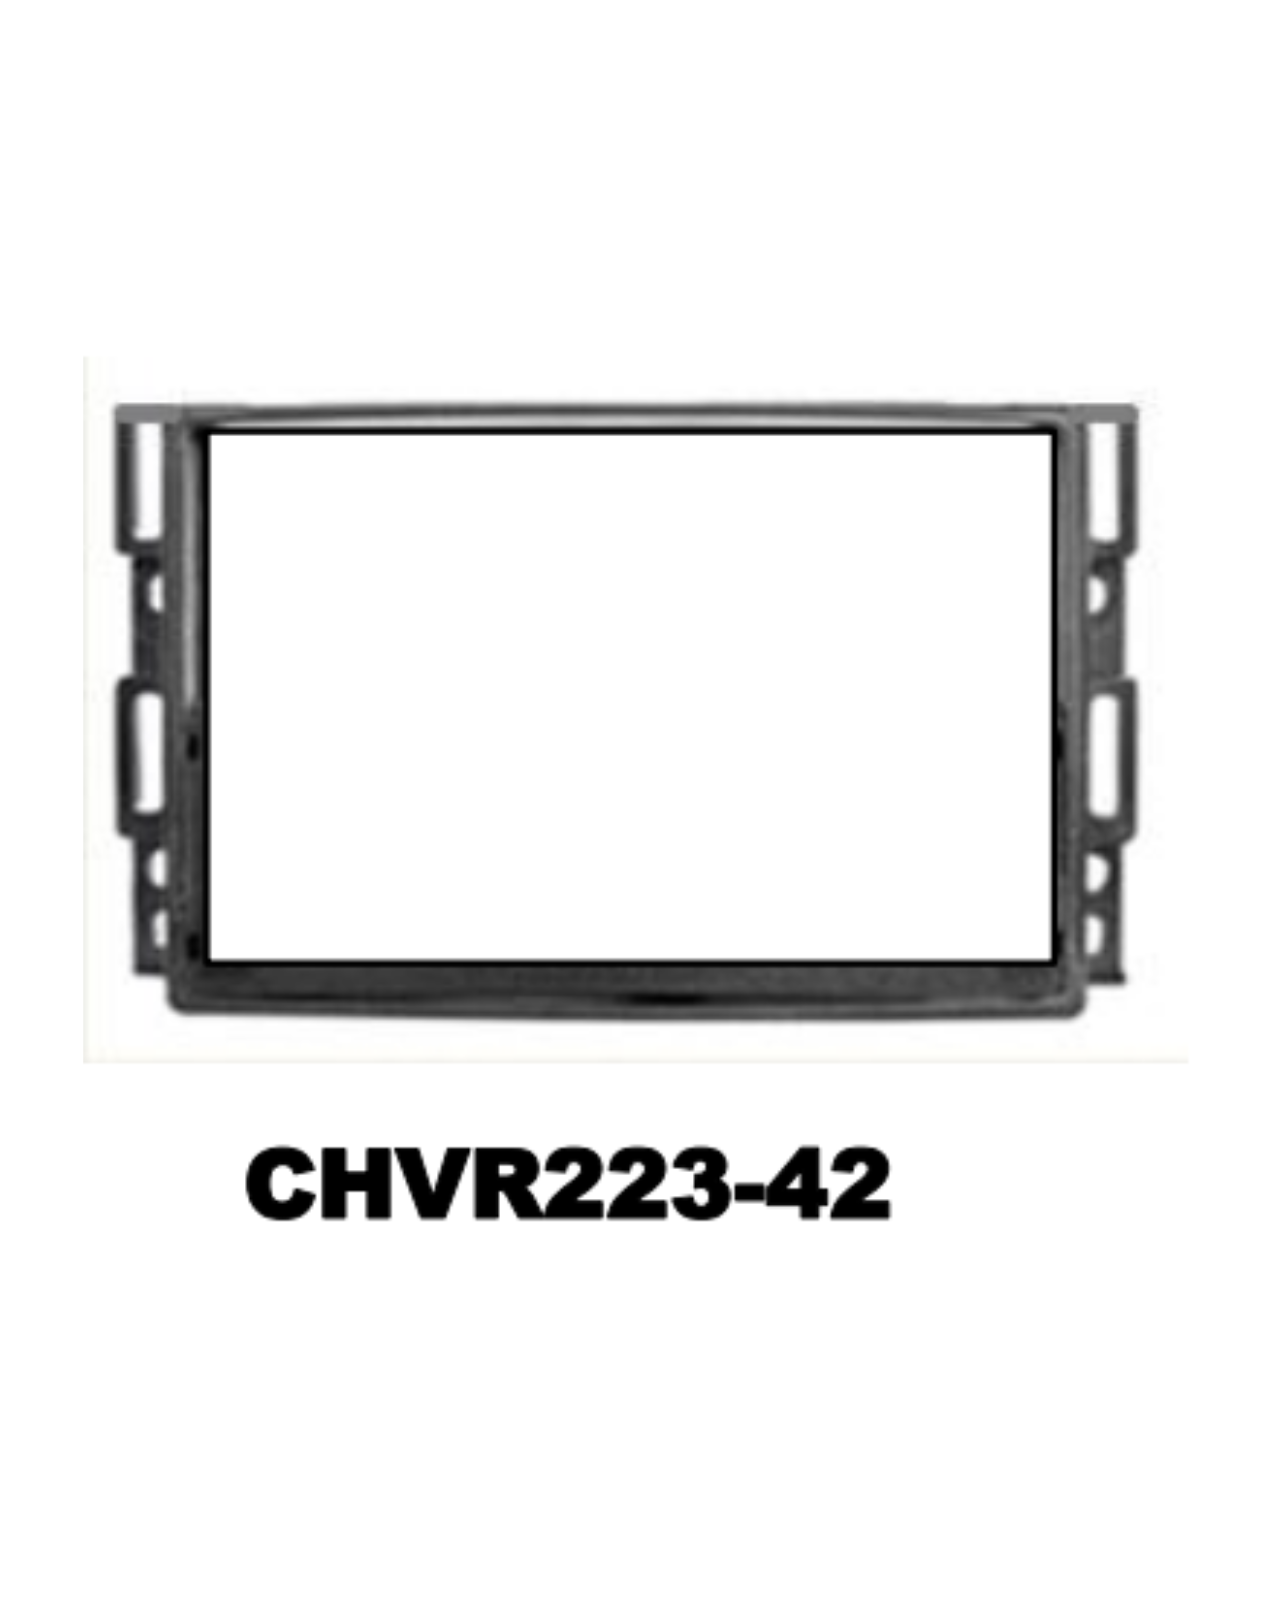 Frente Automotriz CHVR223-42/TI-4201